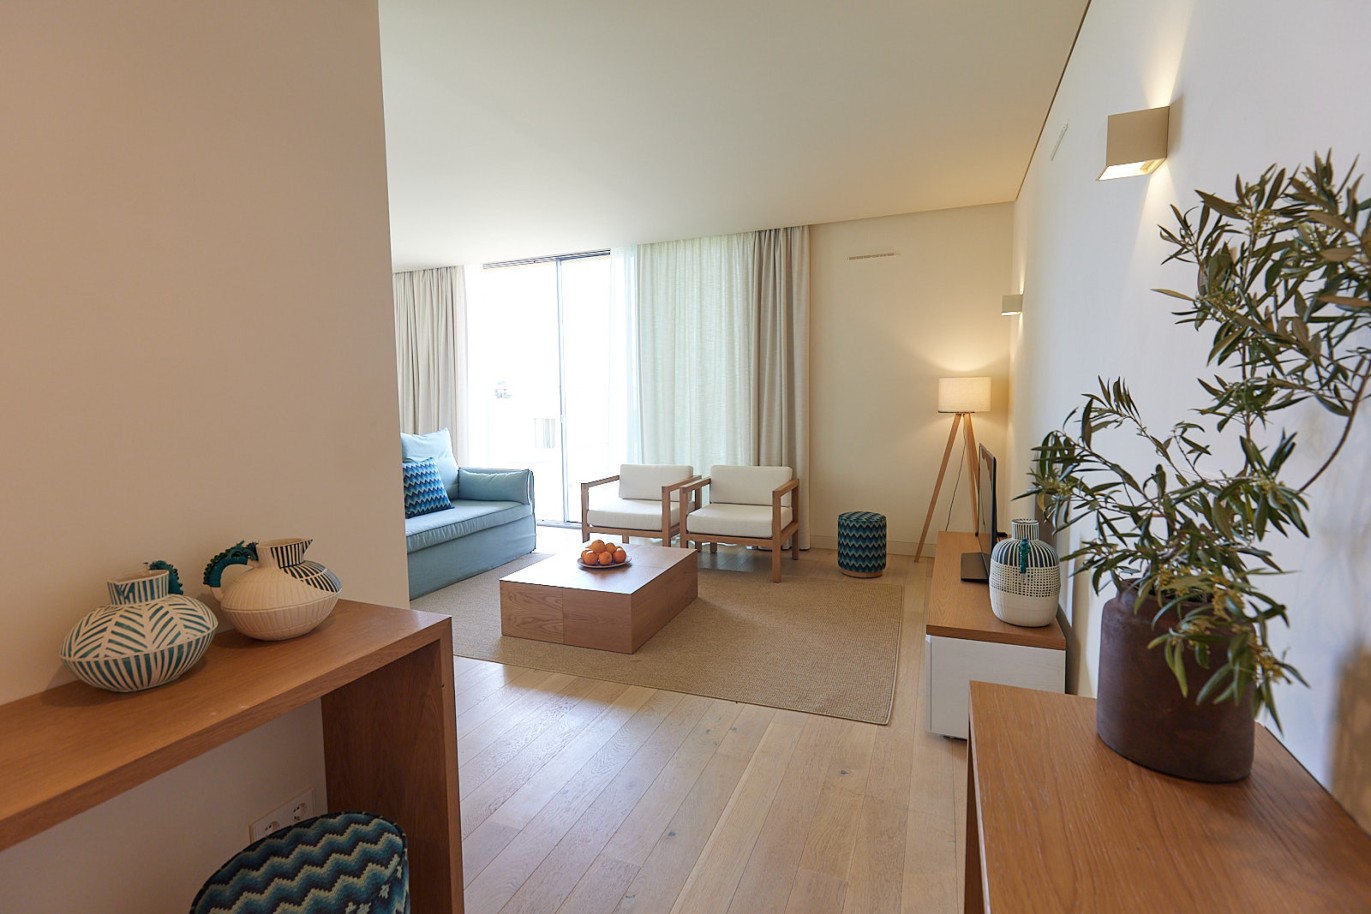 2 bedroom apartment in resort, for sale in Porches, Algarve_228800